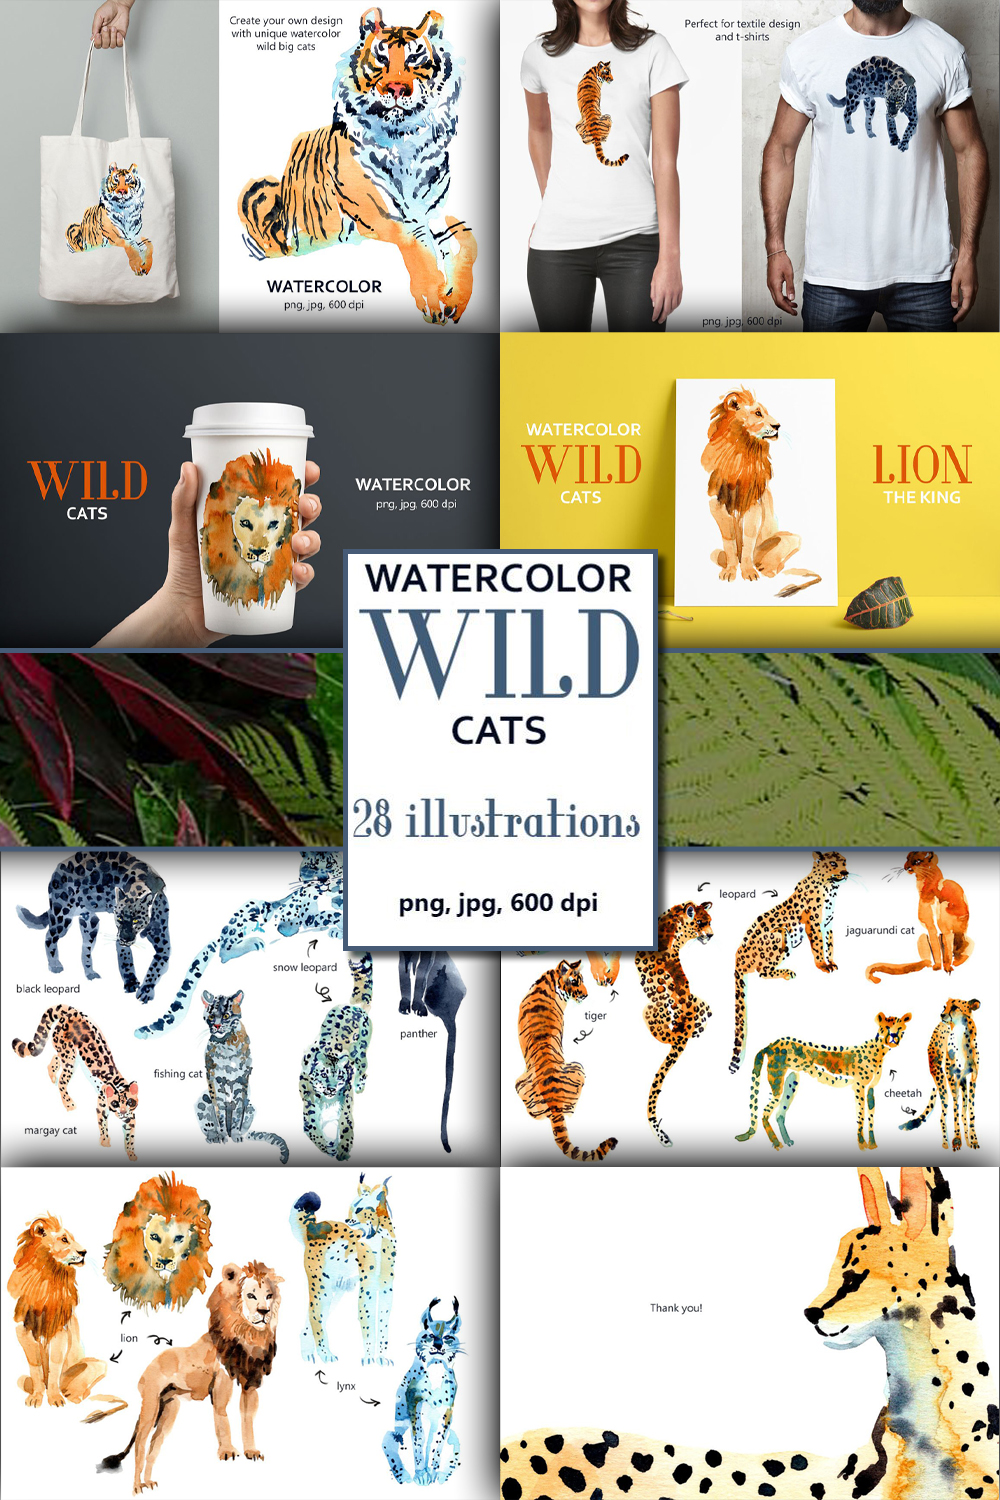 3626130 watercolor wild cats pinterest 1000 1500 332